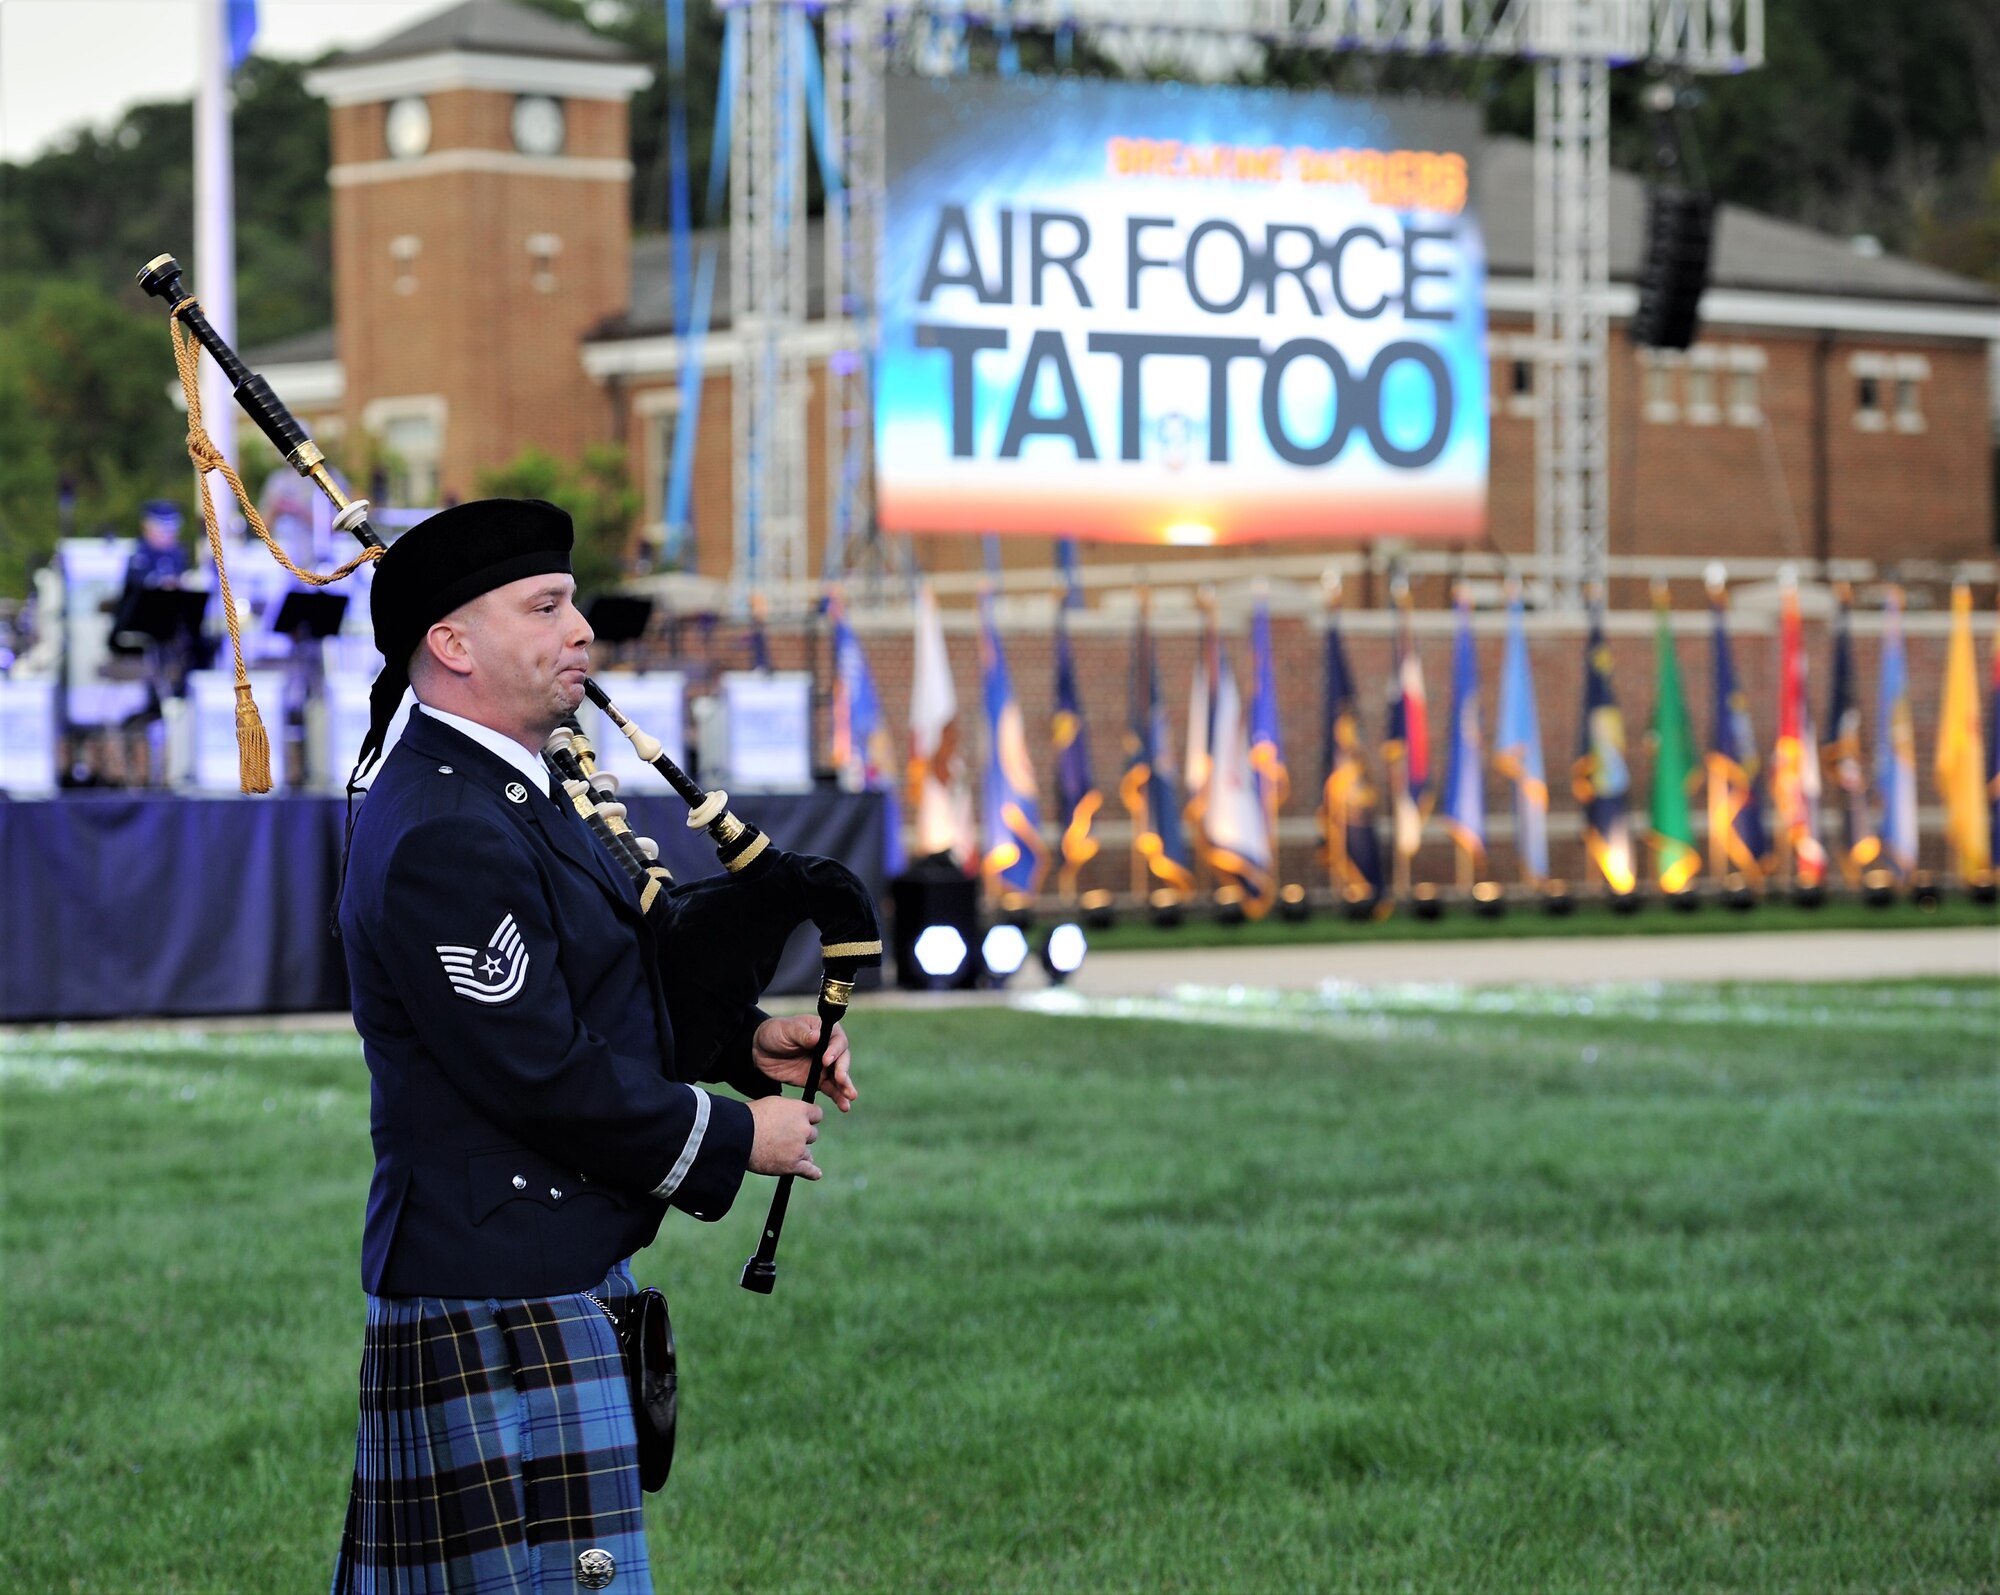 USAF celebrates 70th birthday with military tattoo